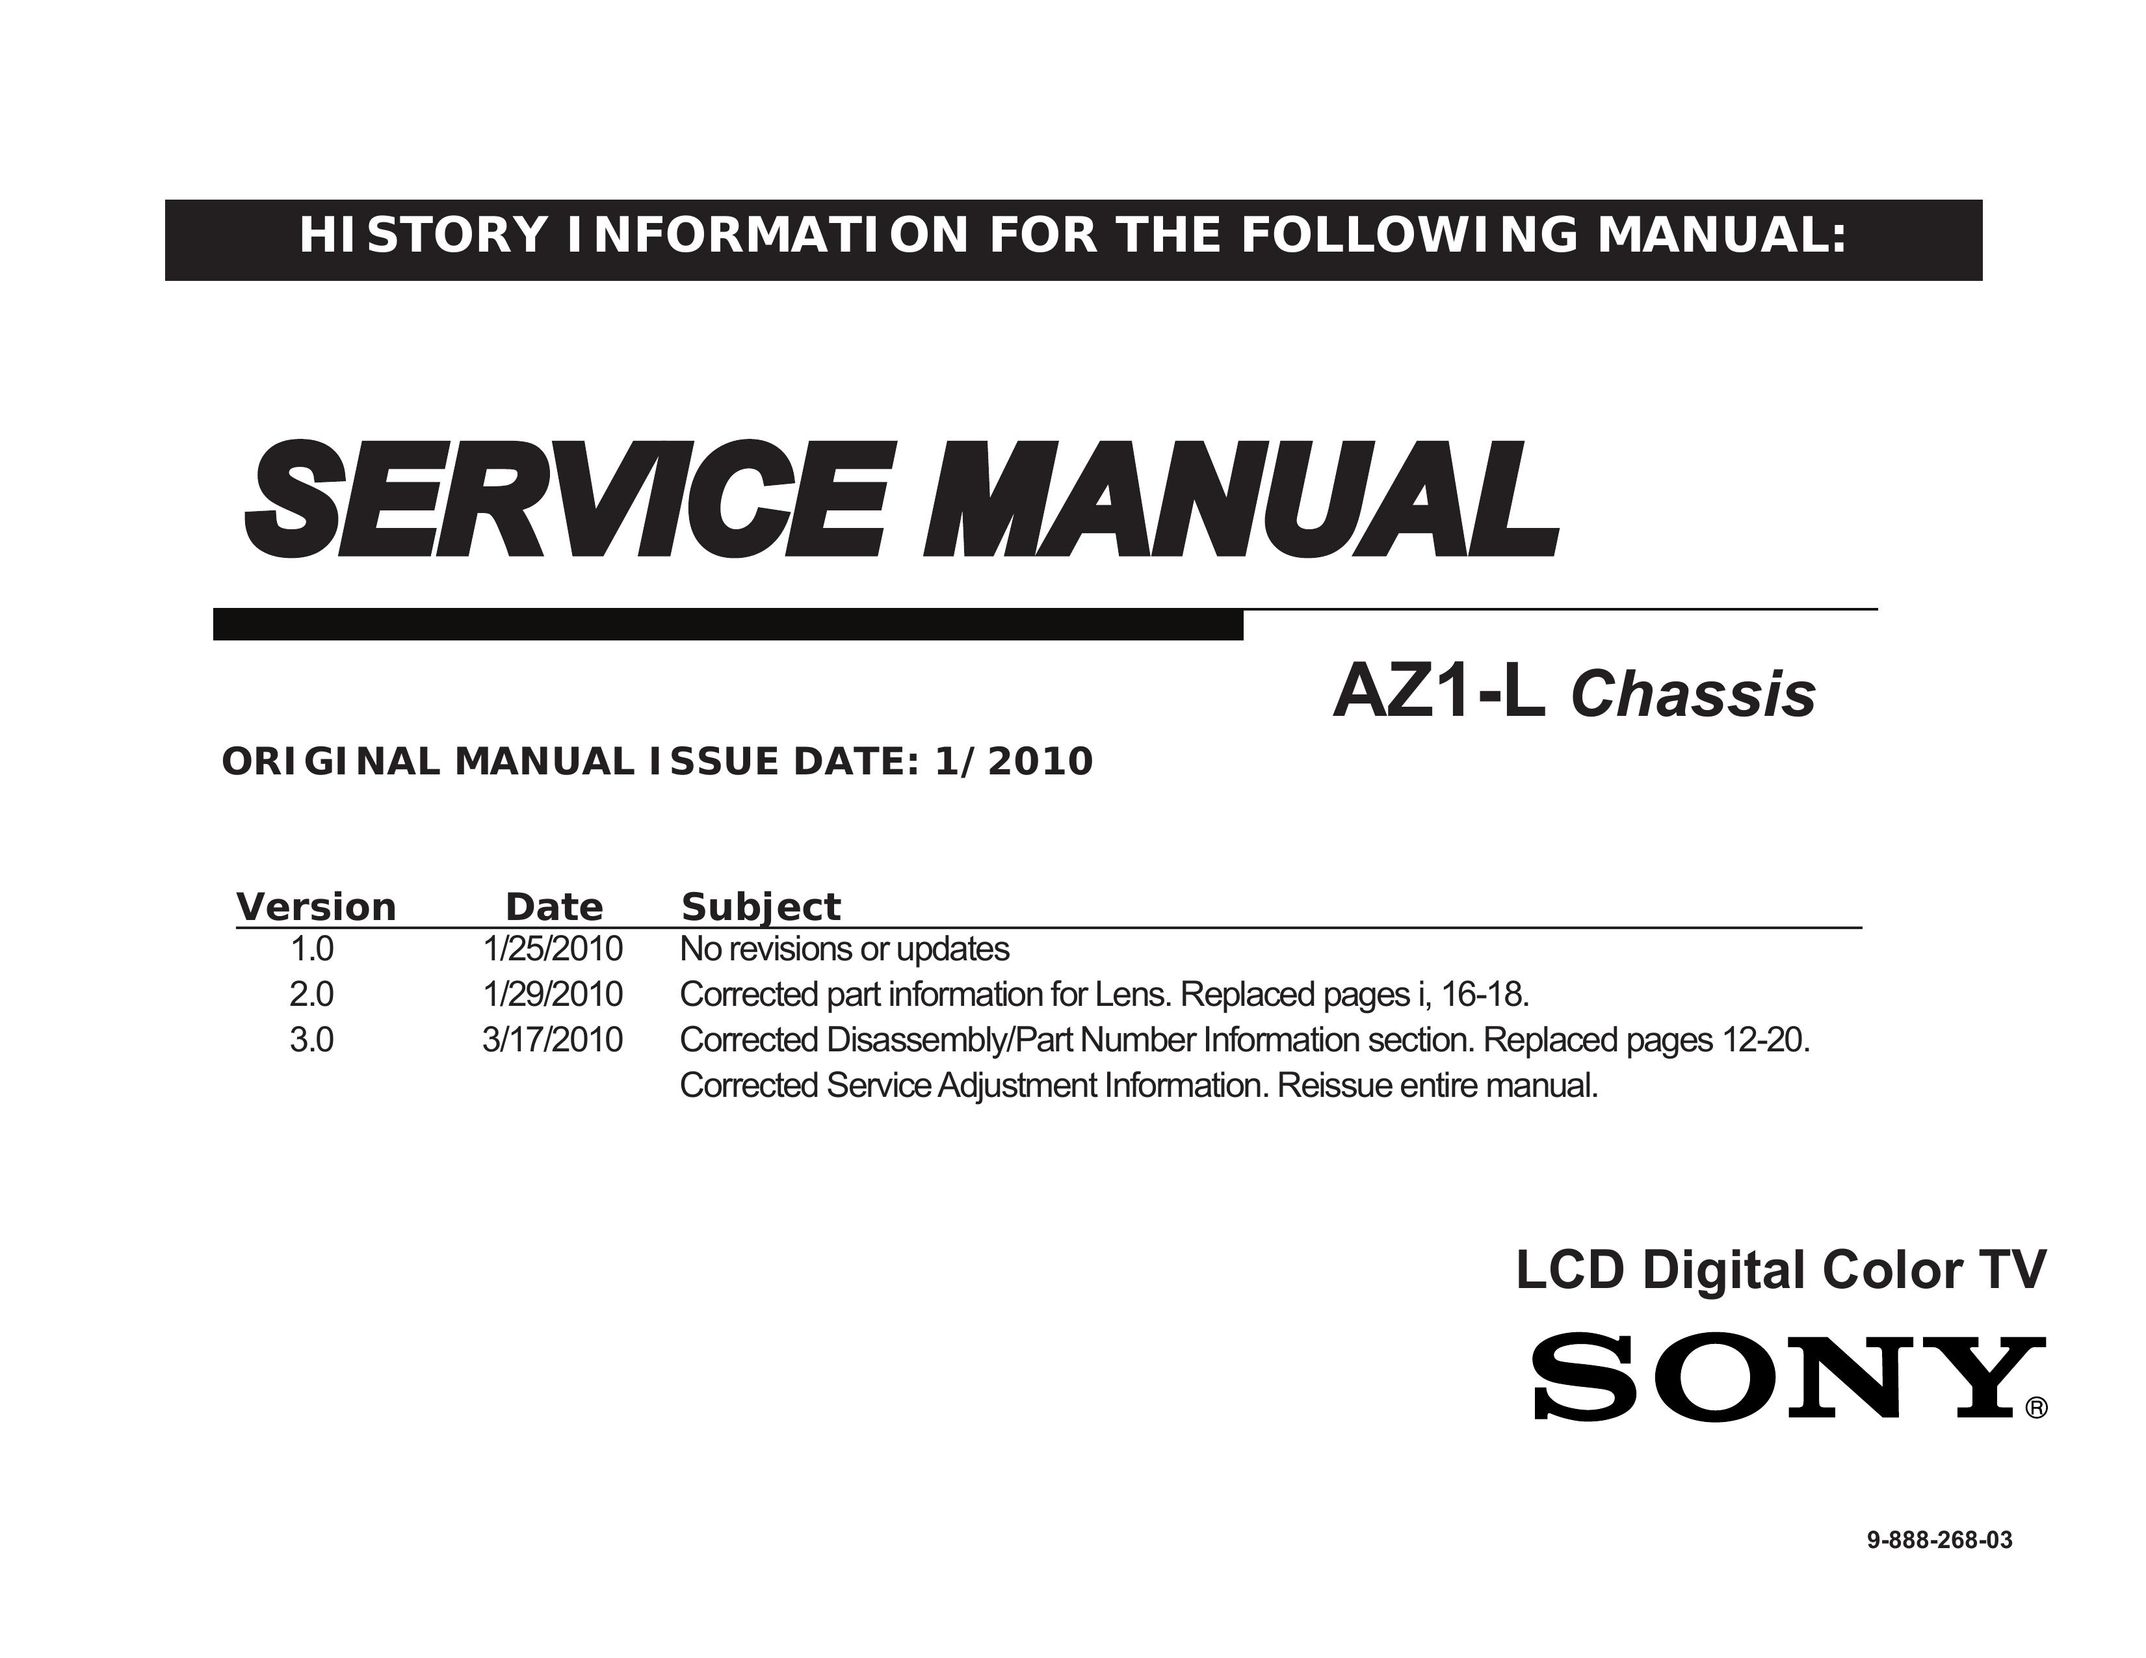 Sony 52EX700 Car Satellite TV System User Manual